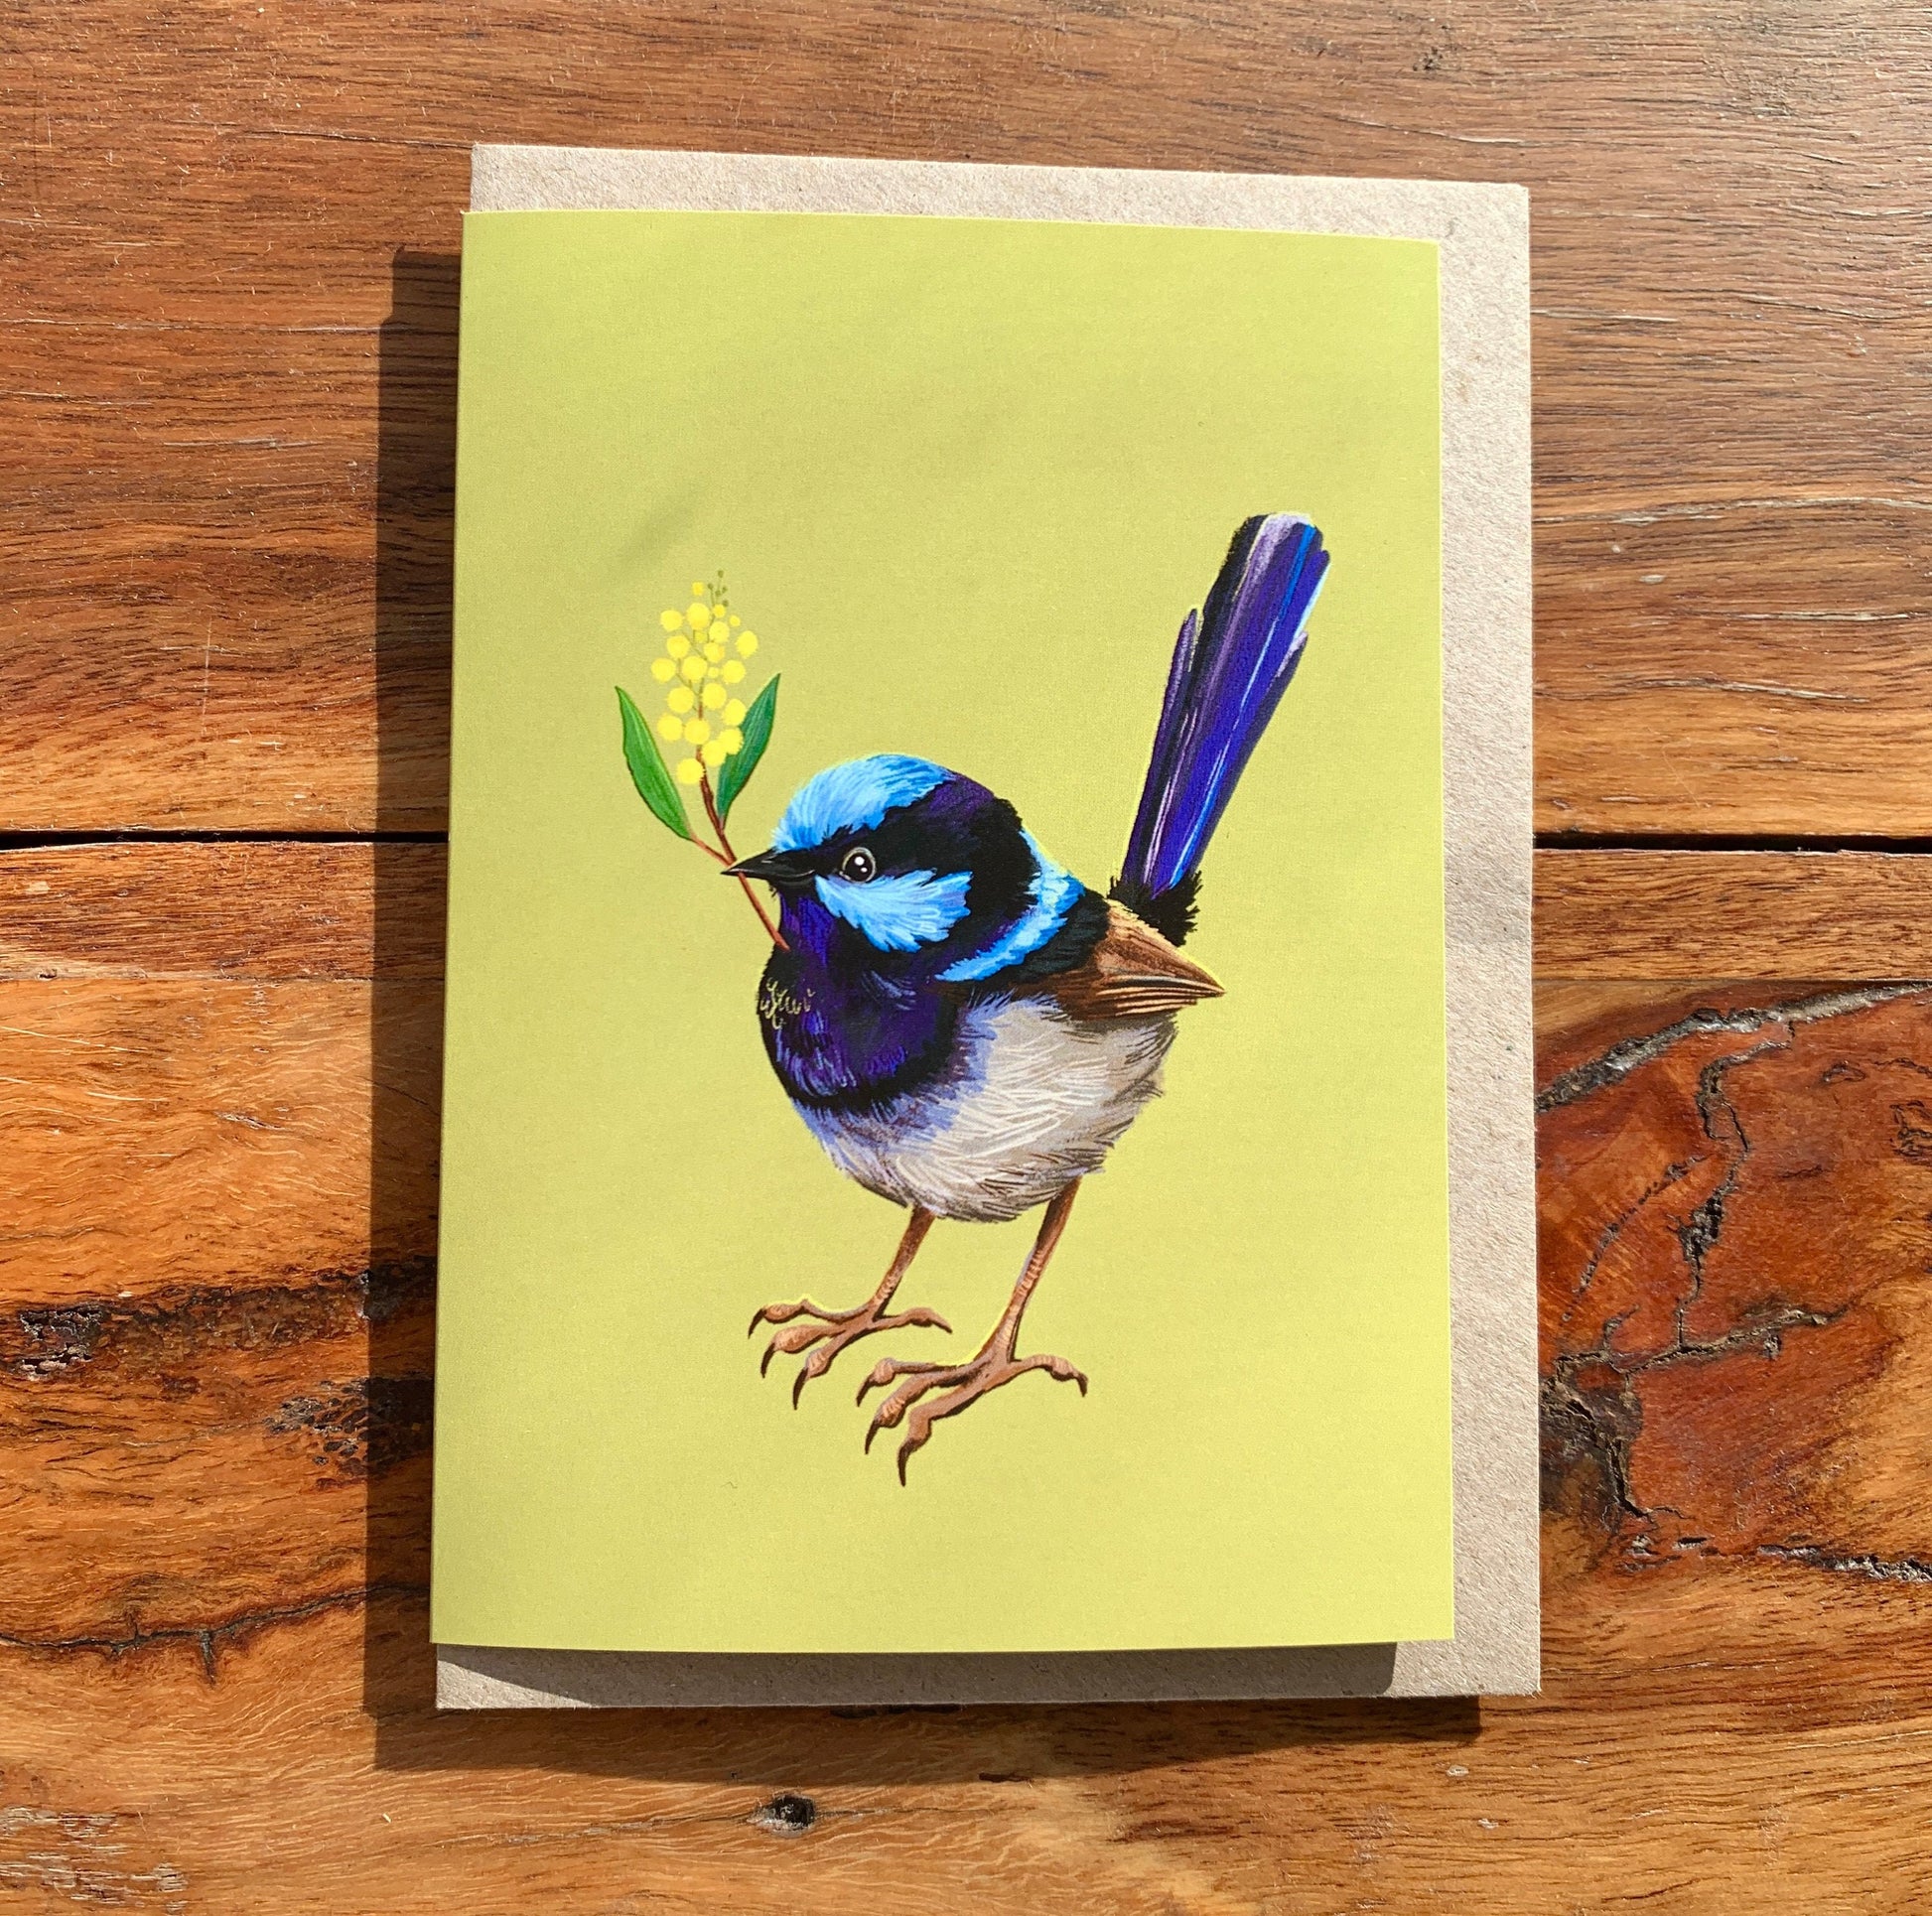 Anna Seed Art | Greeting Card - Fairy Wren. Cute illustration